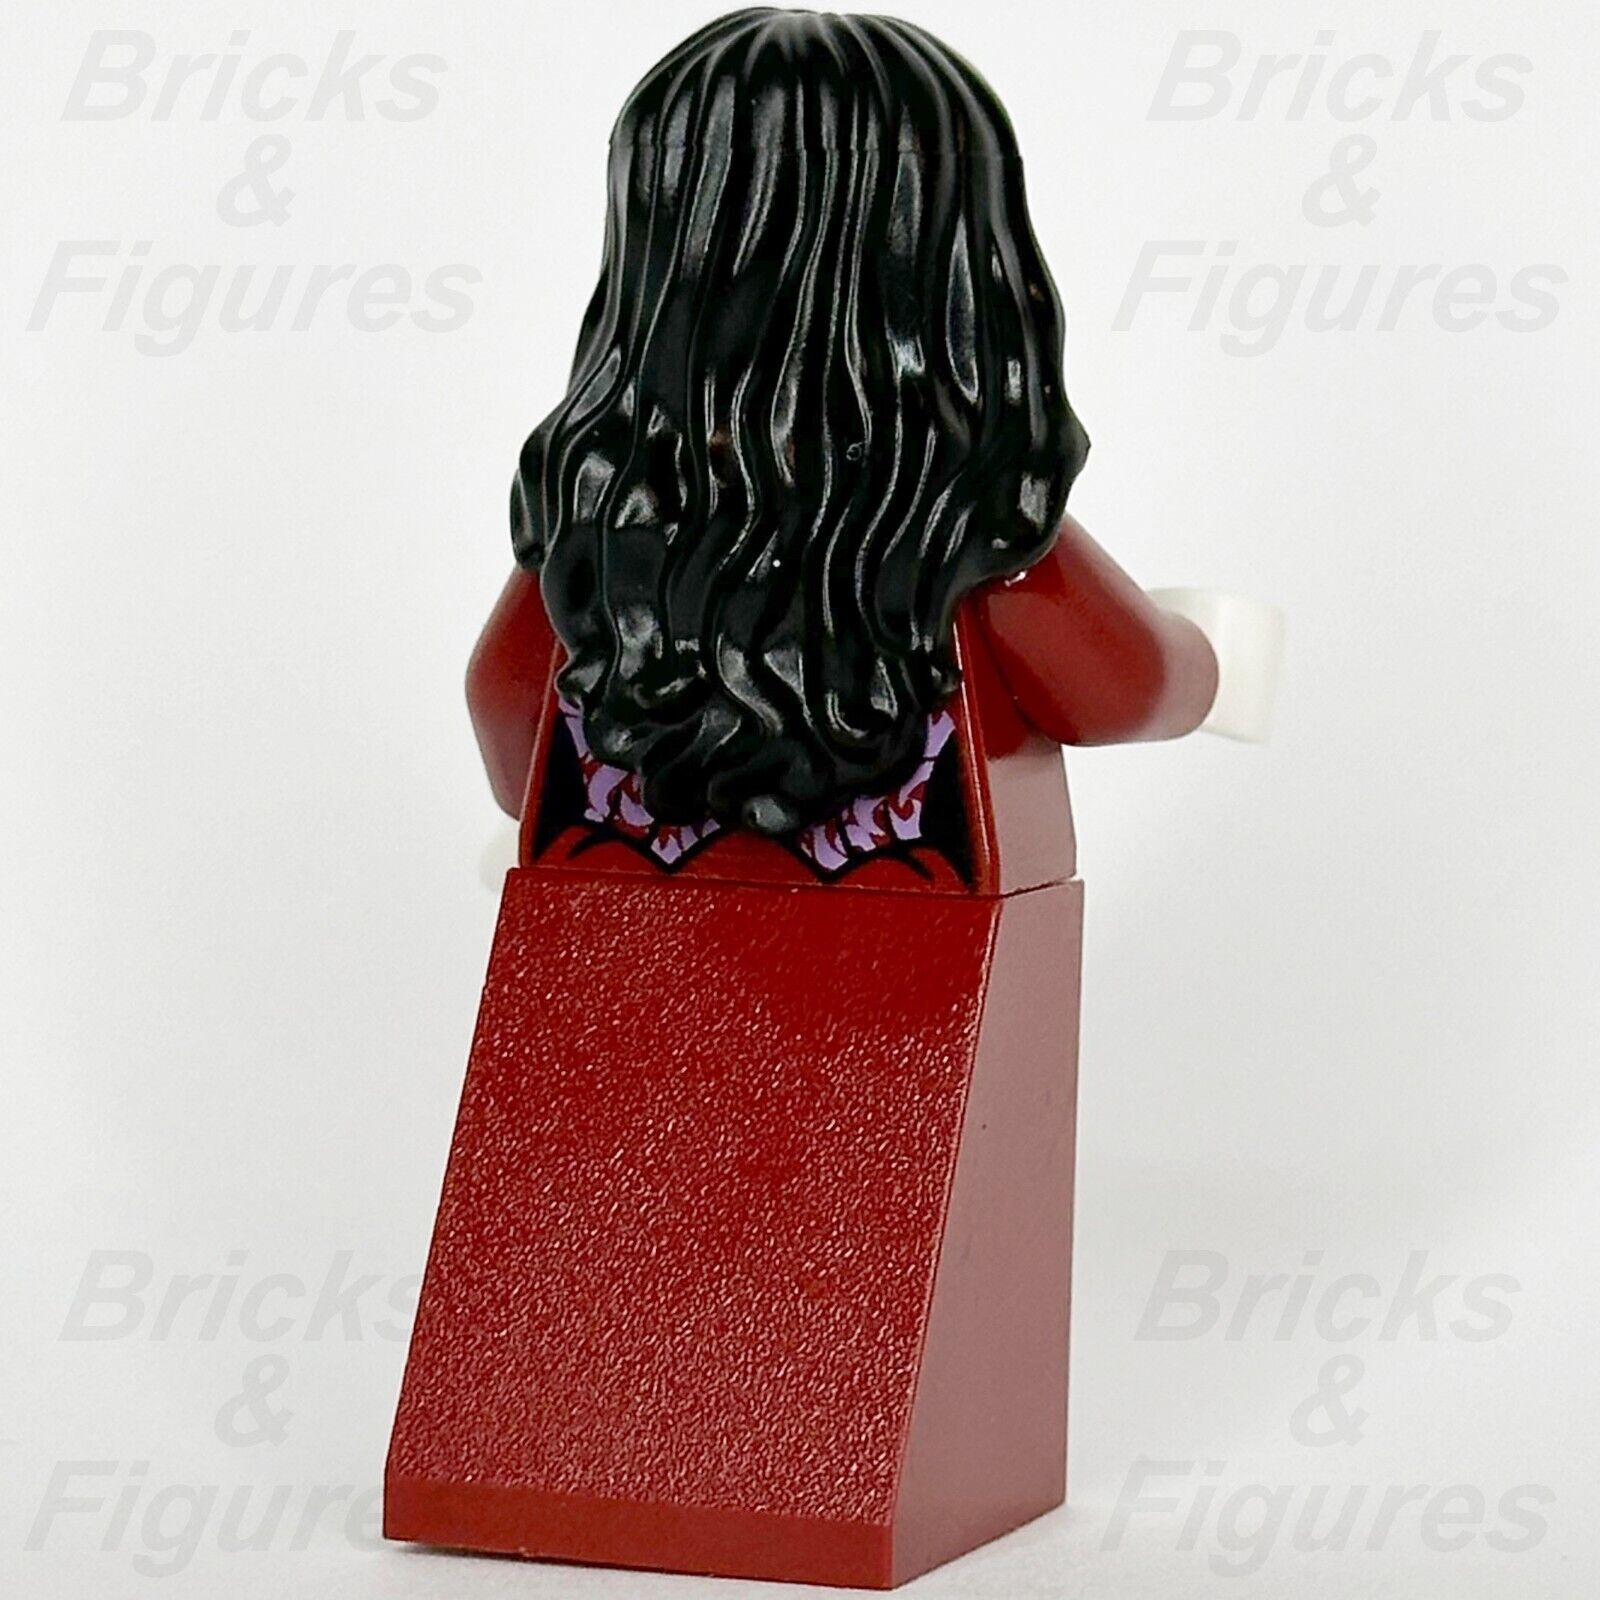 LEGO Monster Fighters Lord Vampyre's Bride Minifigure Vampire 9468 10228 mof008